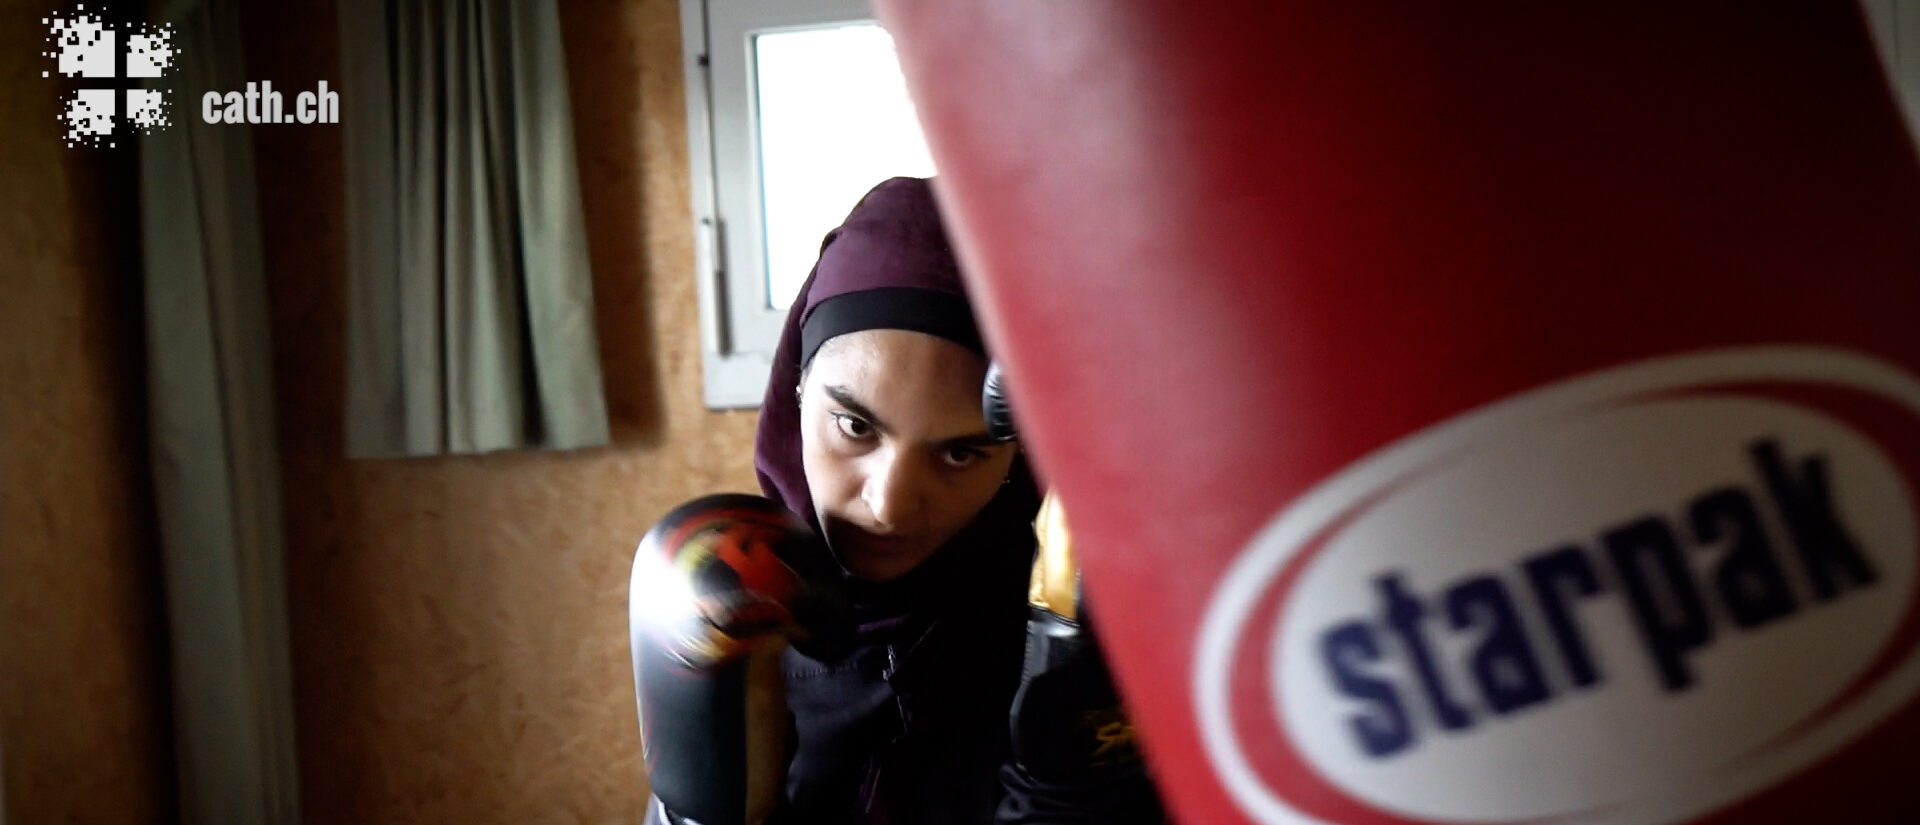 Nida Errahmen Ajmi pratique la boxe dans un esprit de paix | © Christine Mo Costabella